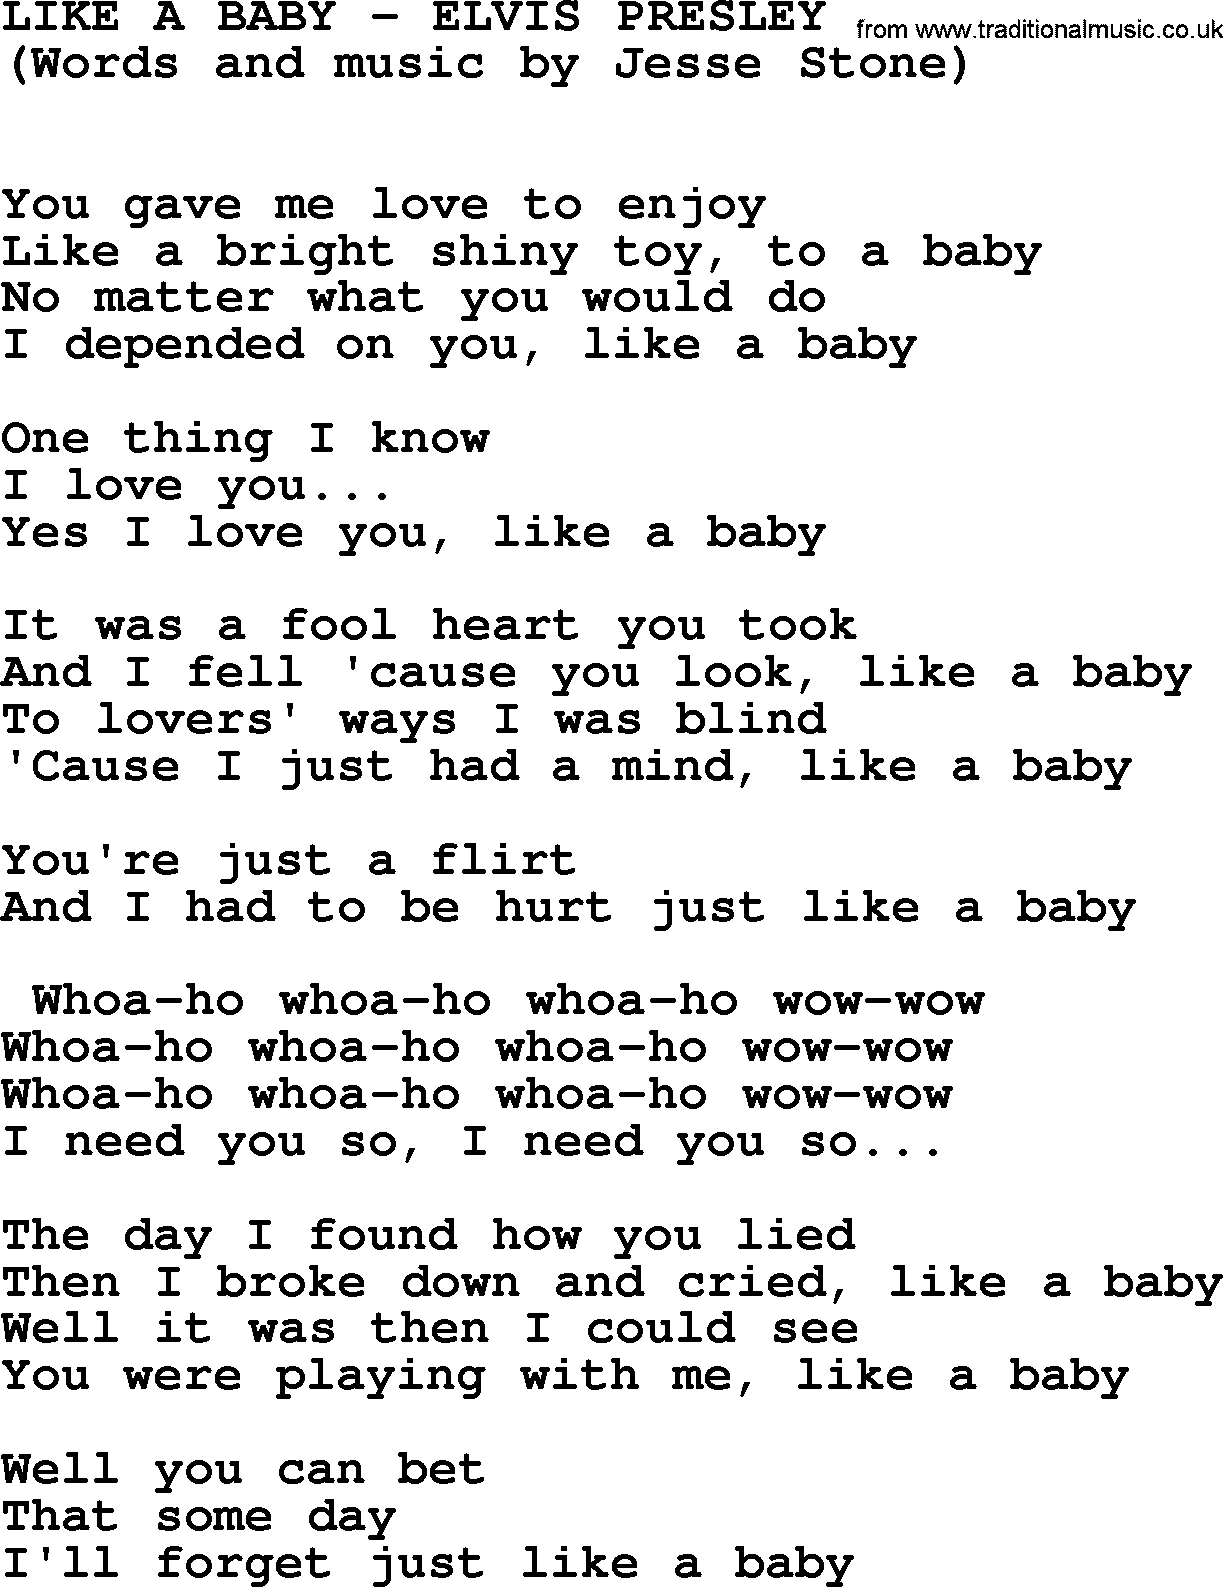 Elvis Presley song: Like A Baby lyrics